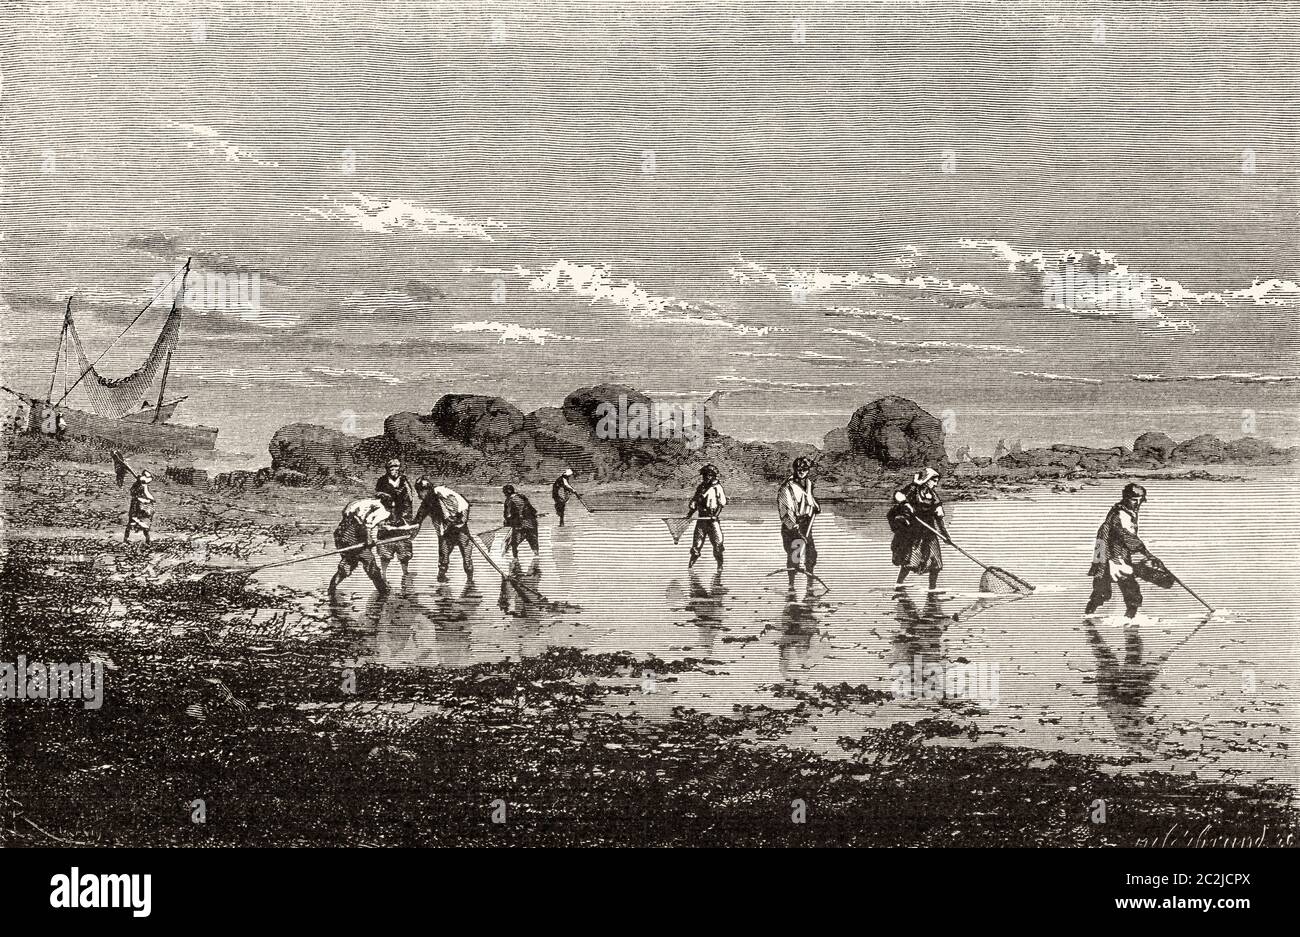 Traditional artisanal prawn fishing at low tide. Old 19th century engraved illustration, El Mundo Ilustrado 1880 Stock Photo